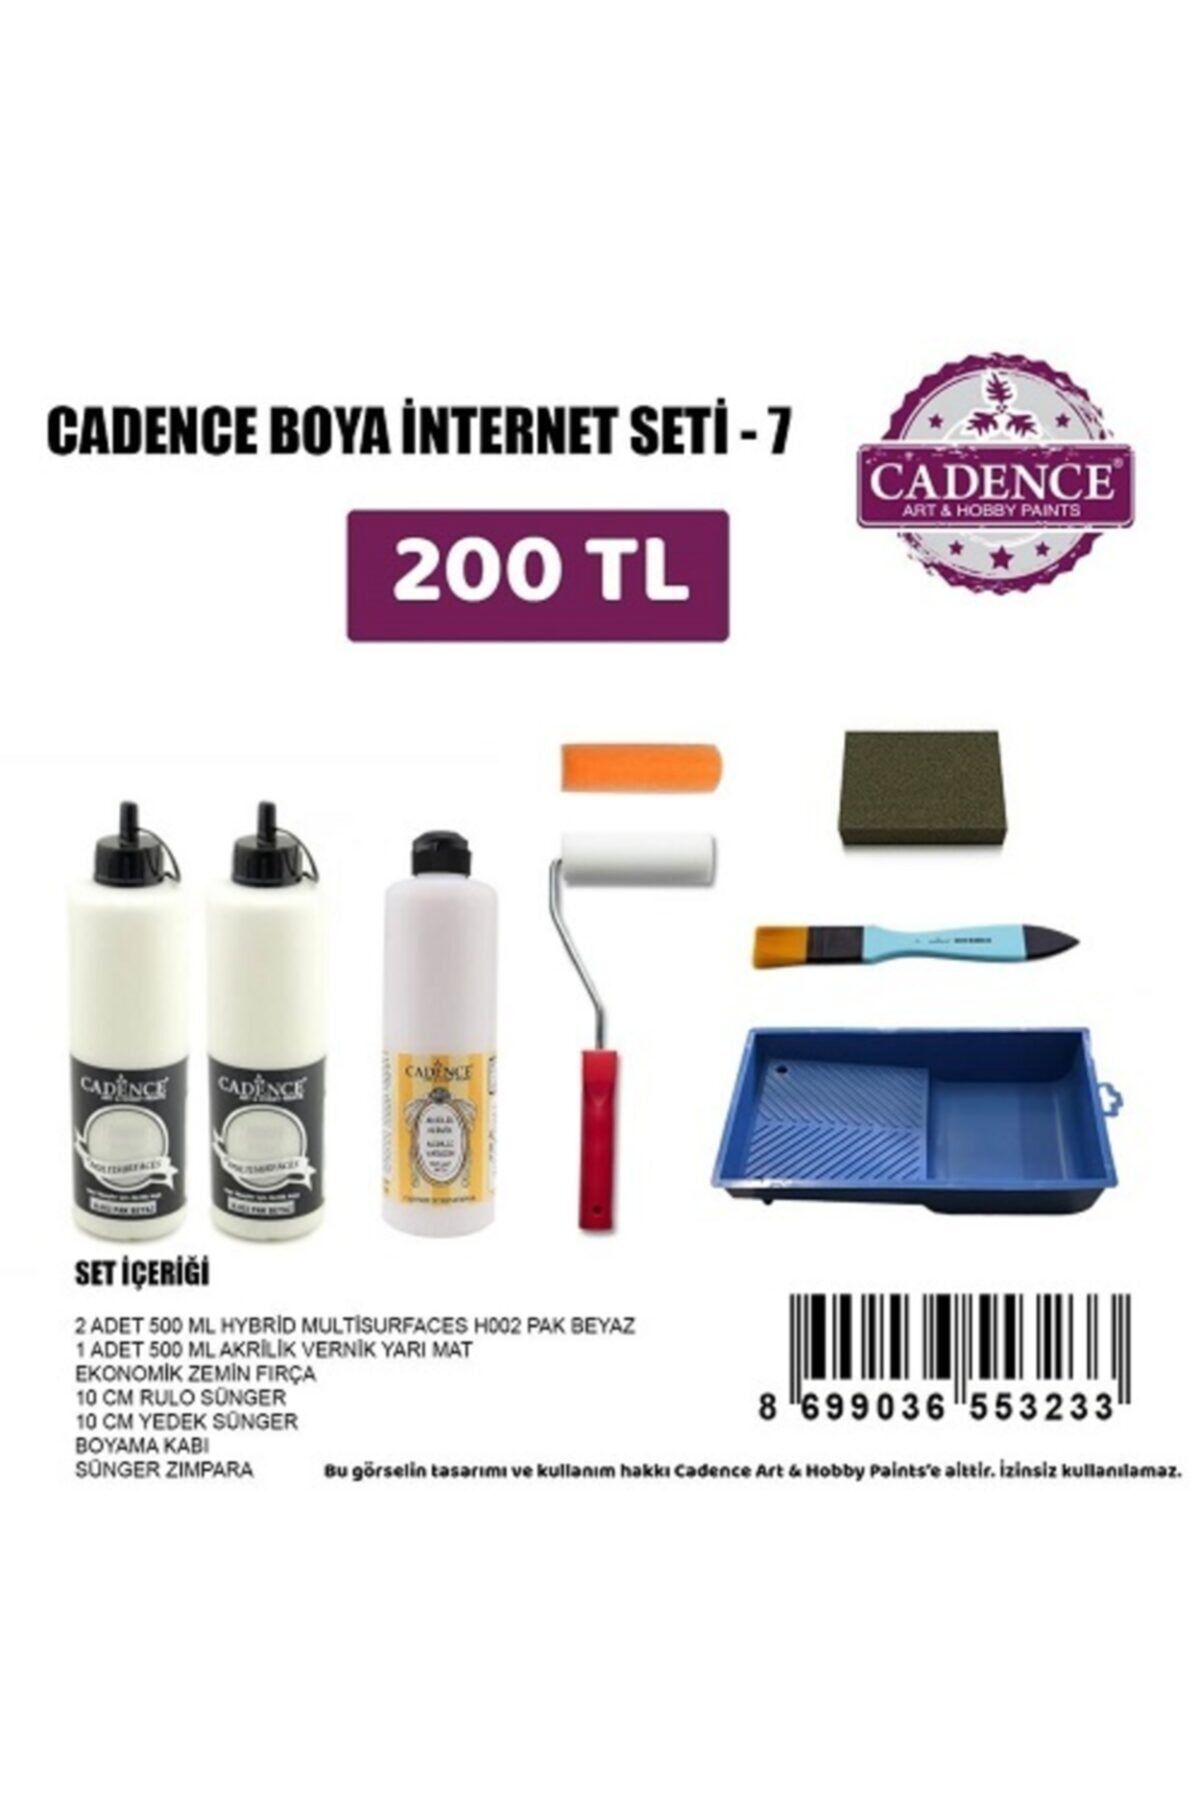 Cadence Internet Seti - 7